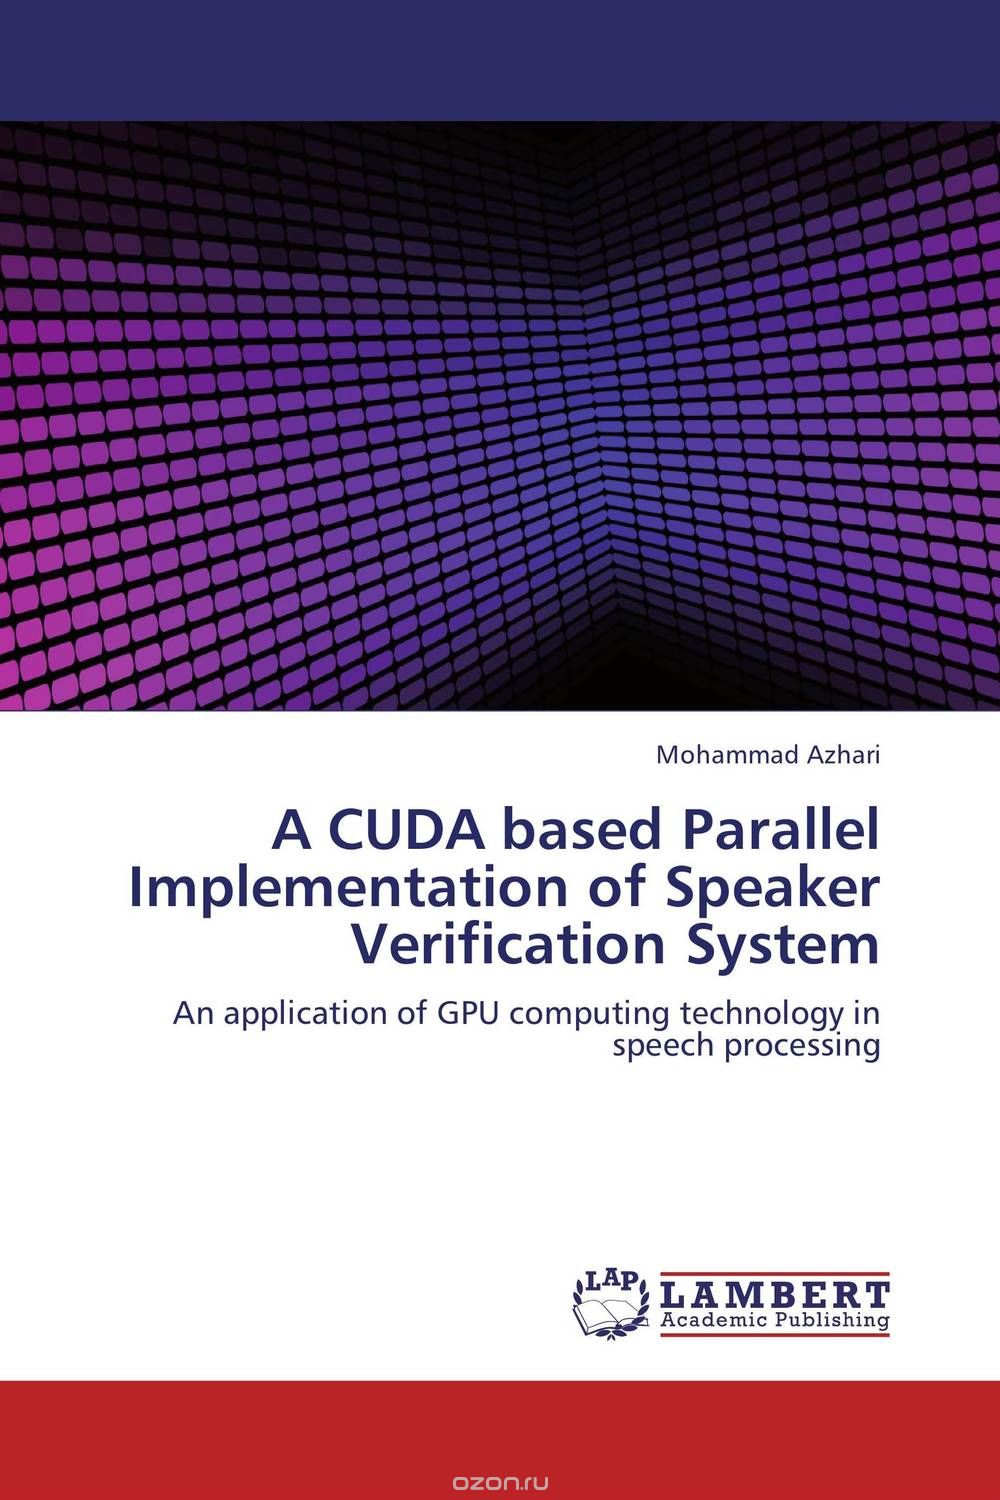 Скачать книгу "A CUDA based Parallel Implementation of Speaker Verification System"